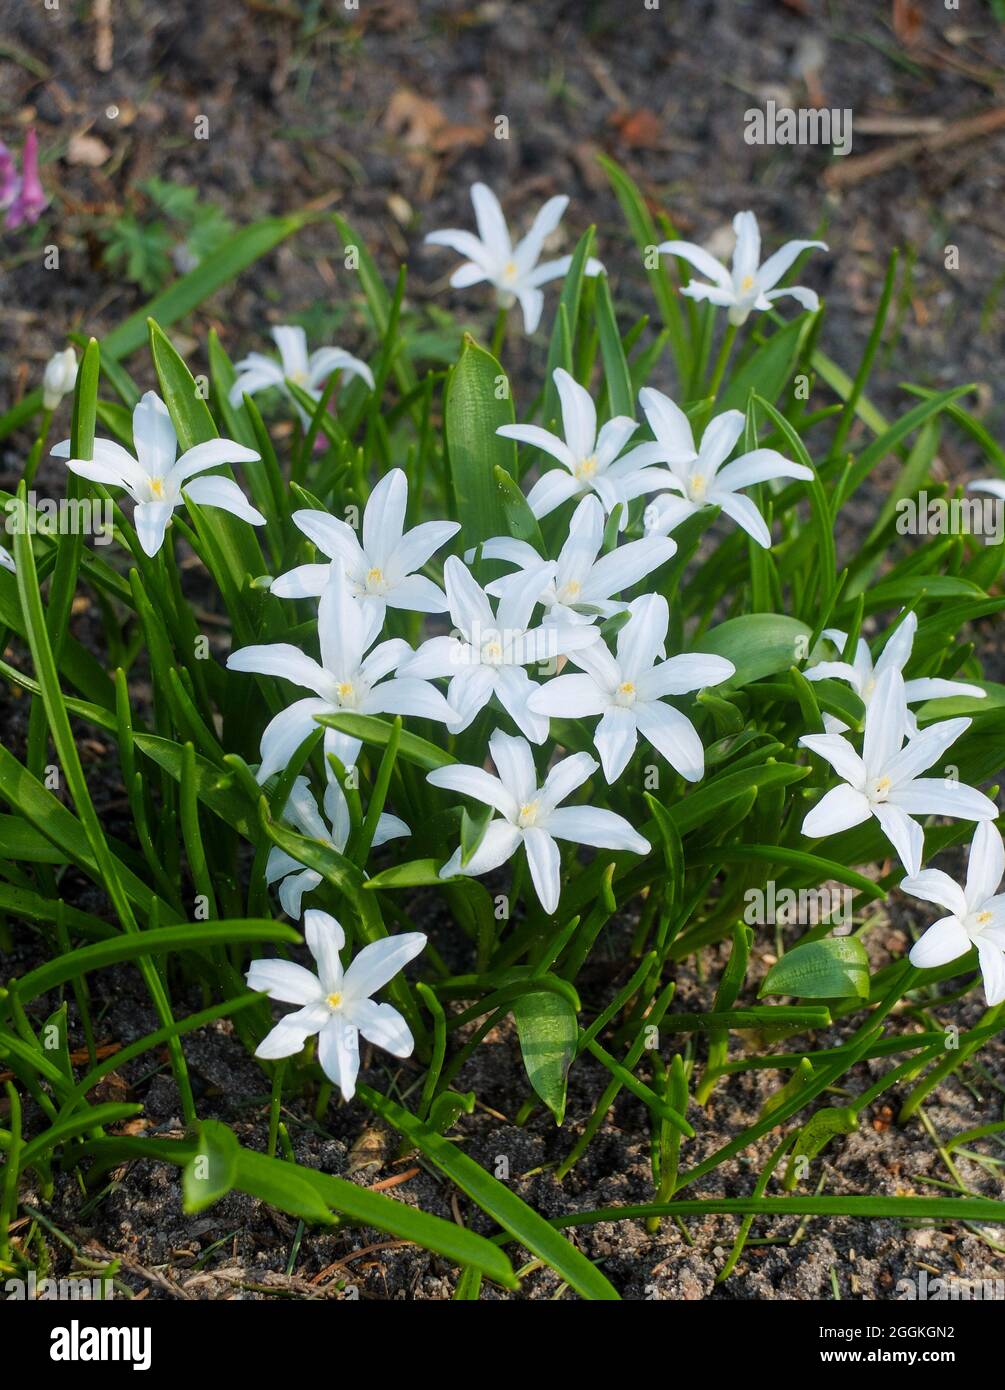 The white snow shine (Chionodoxa luciliae, snow pride, star hyacinth) 'Alba' Stock Photo